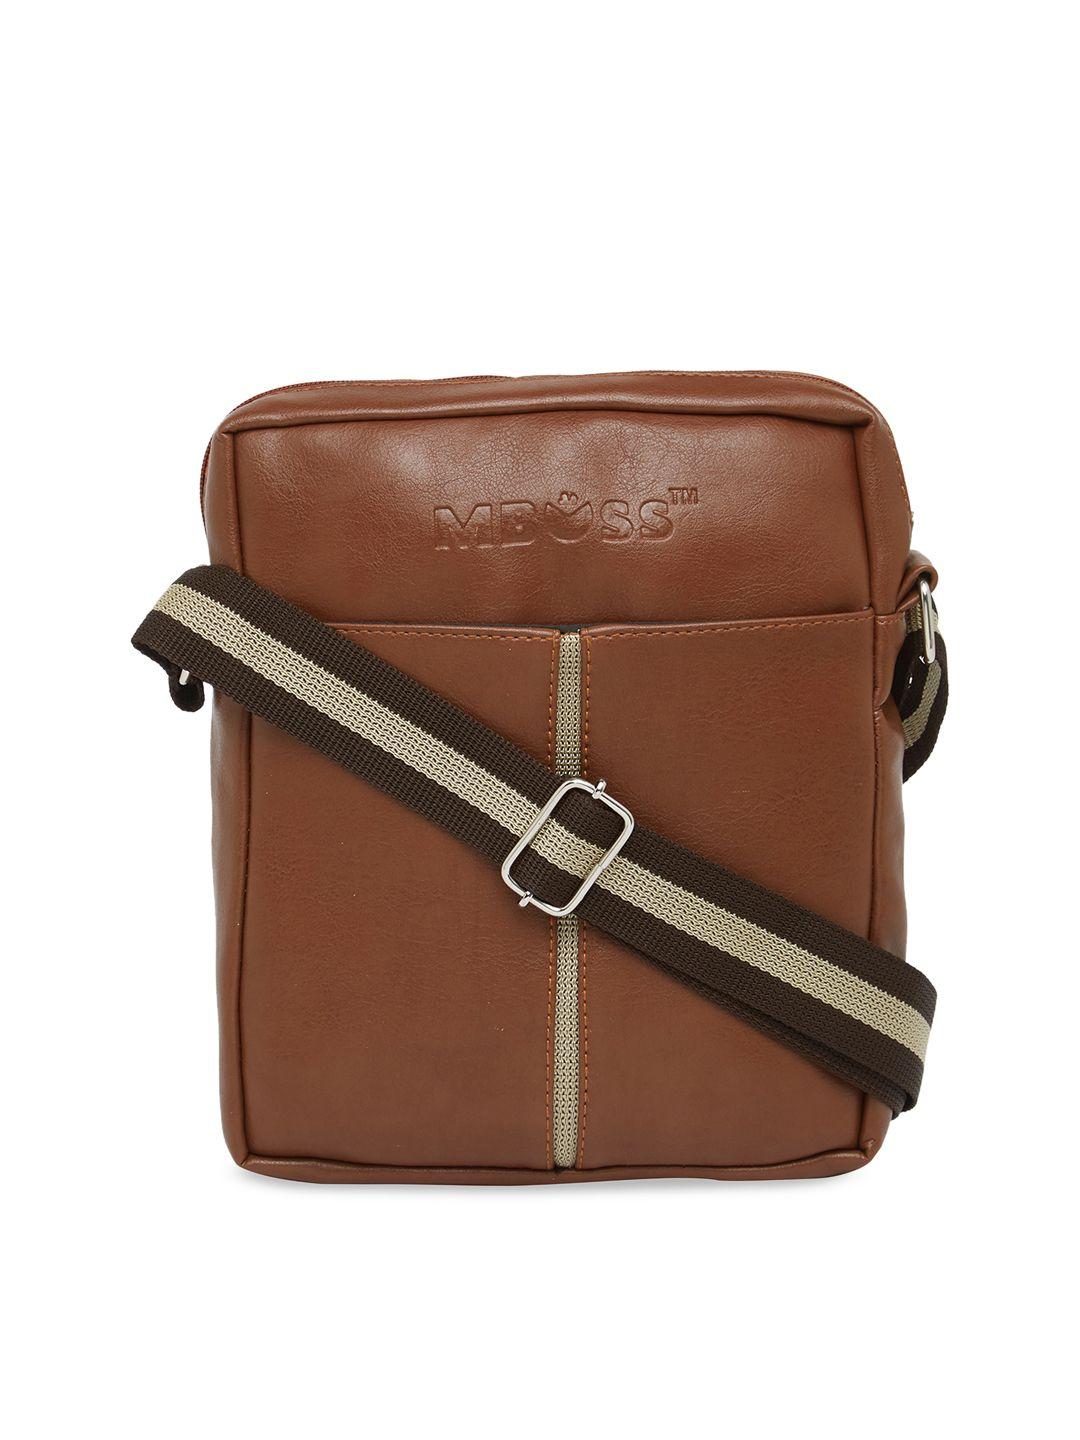 mboss unisex tan brown solid messenger bag